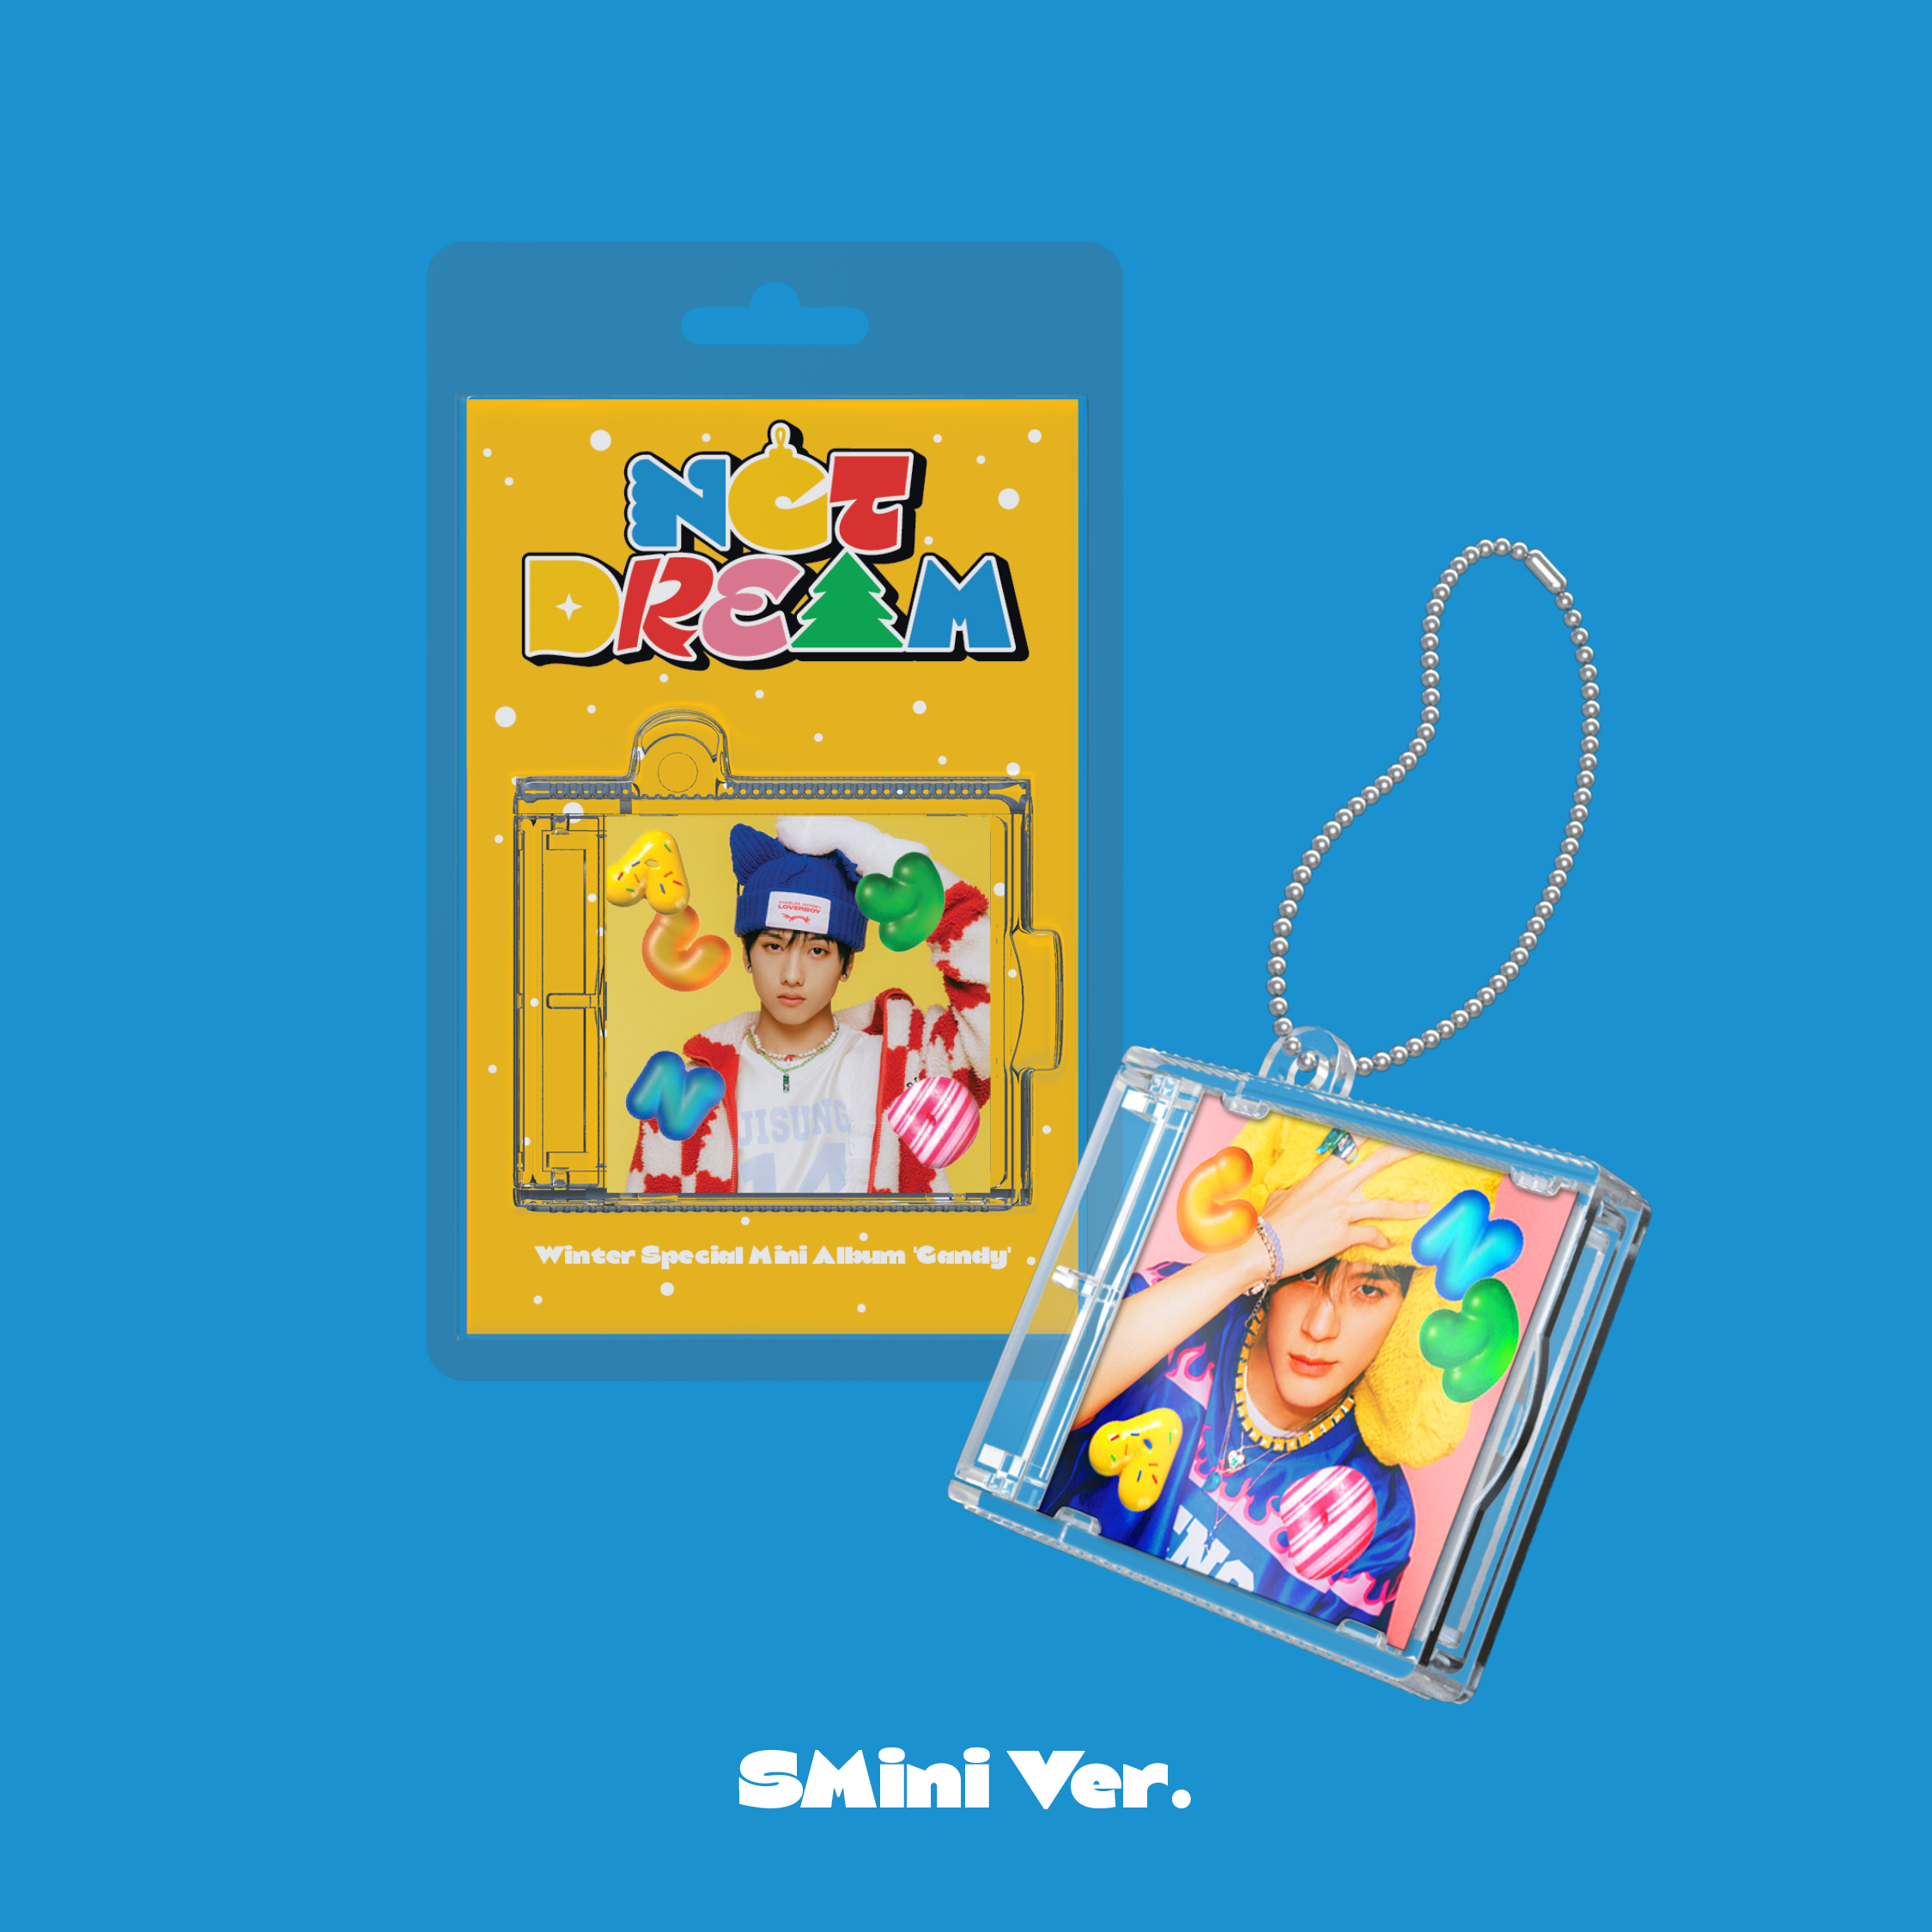 [全款 裸专] [7CD 套装] NCT DREAM - Winter Special Mini Album [Candy] (SMini Ver.) (Smart Album)_忙碌的ATM组